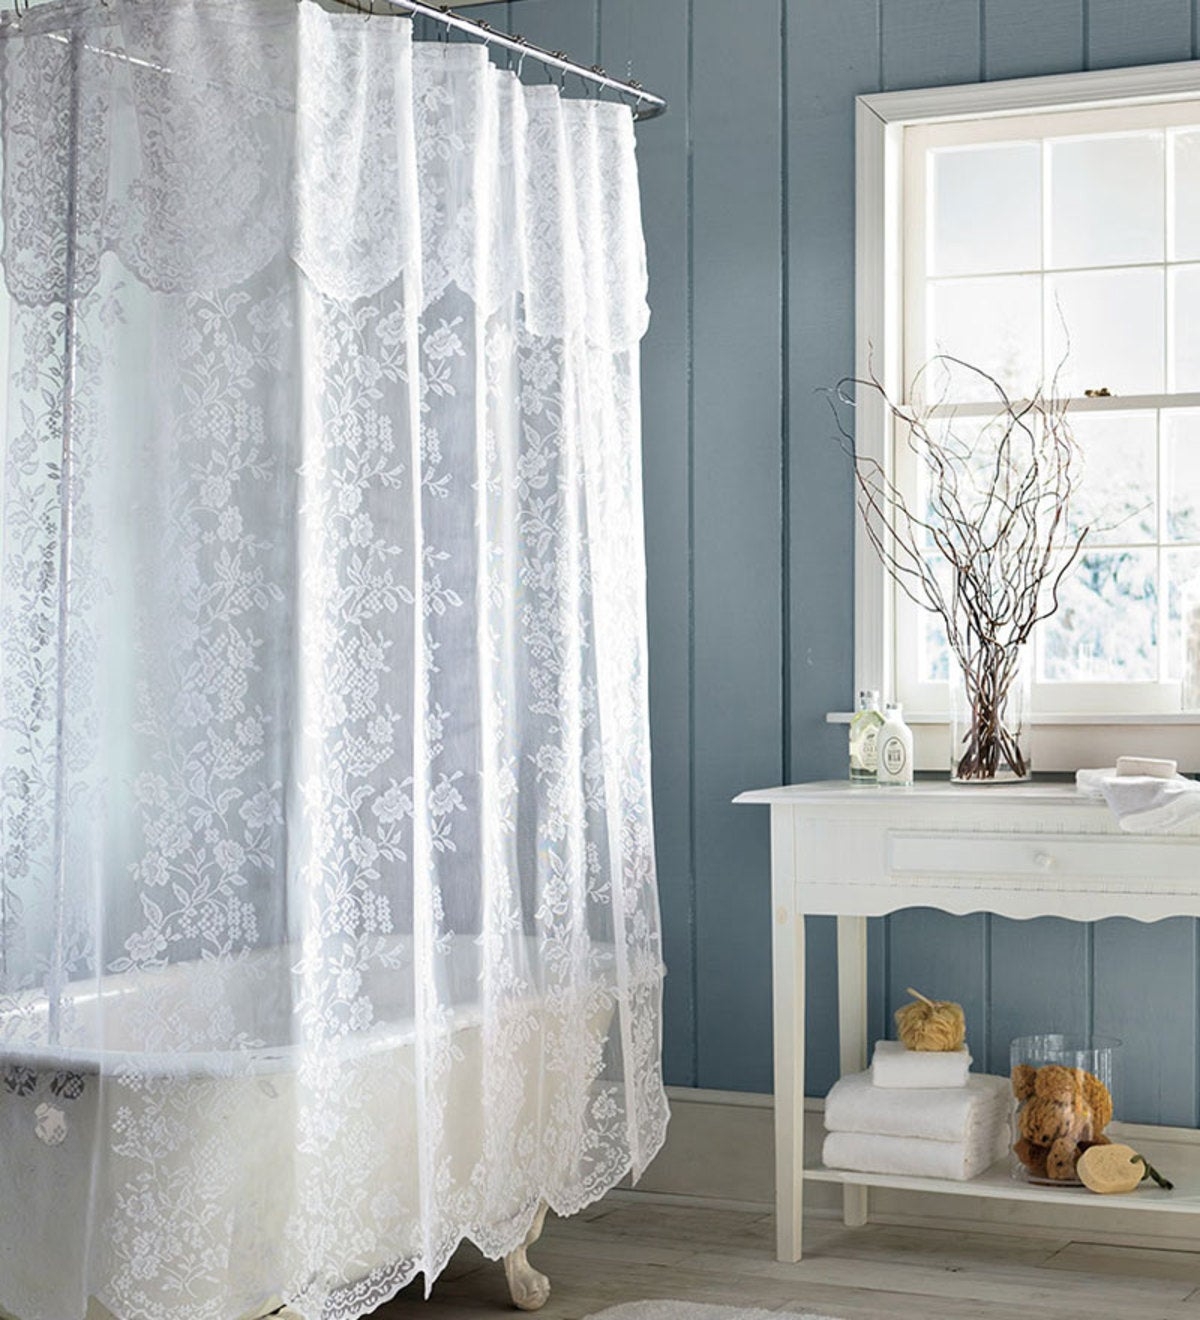 Bathroom Shower Curtain Waterproof Portlight Pattern Panel Fabric Sheer 